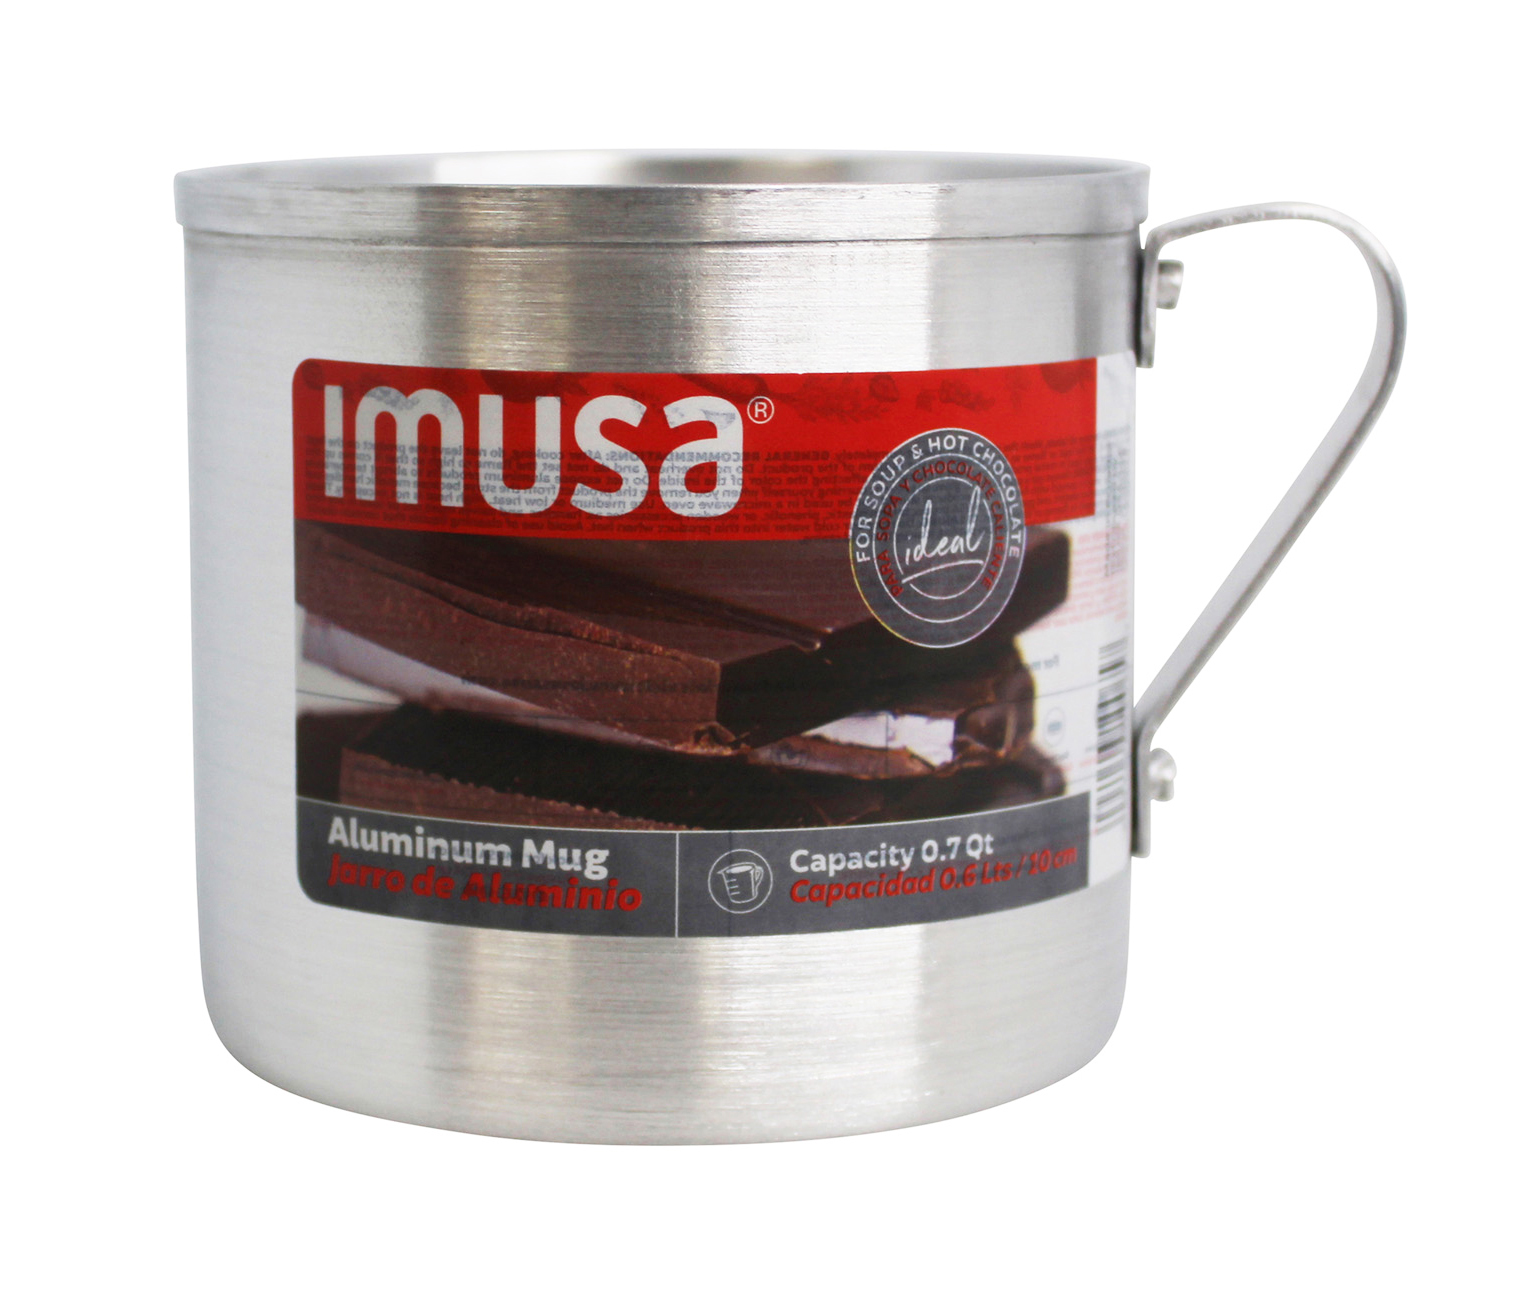 Imusa 0.7 Quart Capacity Aluminum Mug for Stovetop Use or Camping, Silver - image 3 of 11